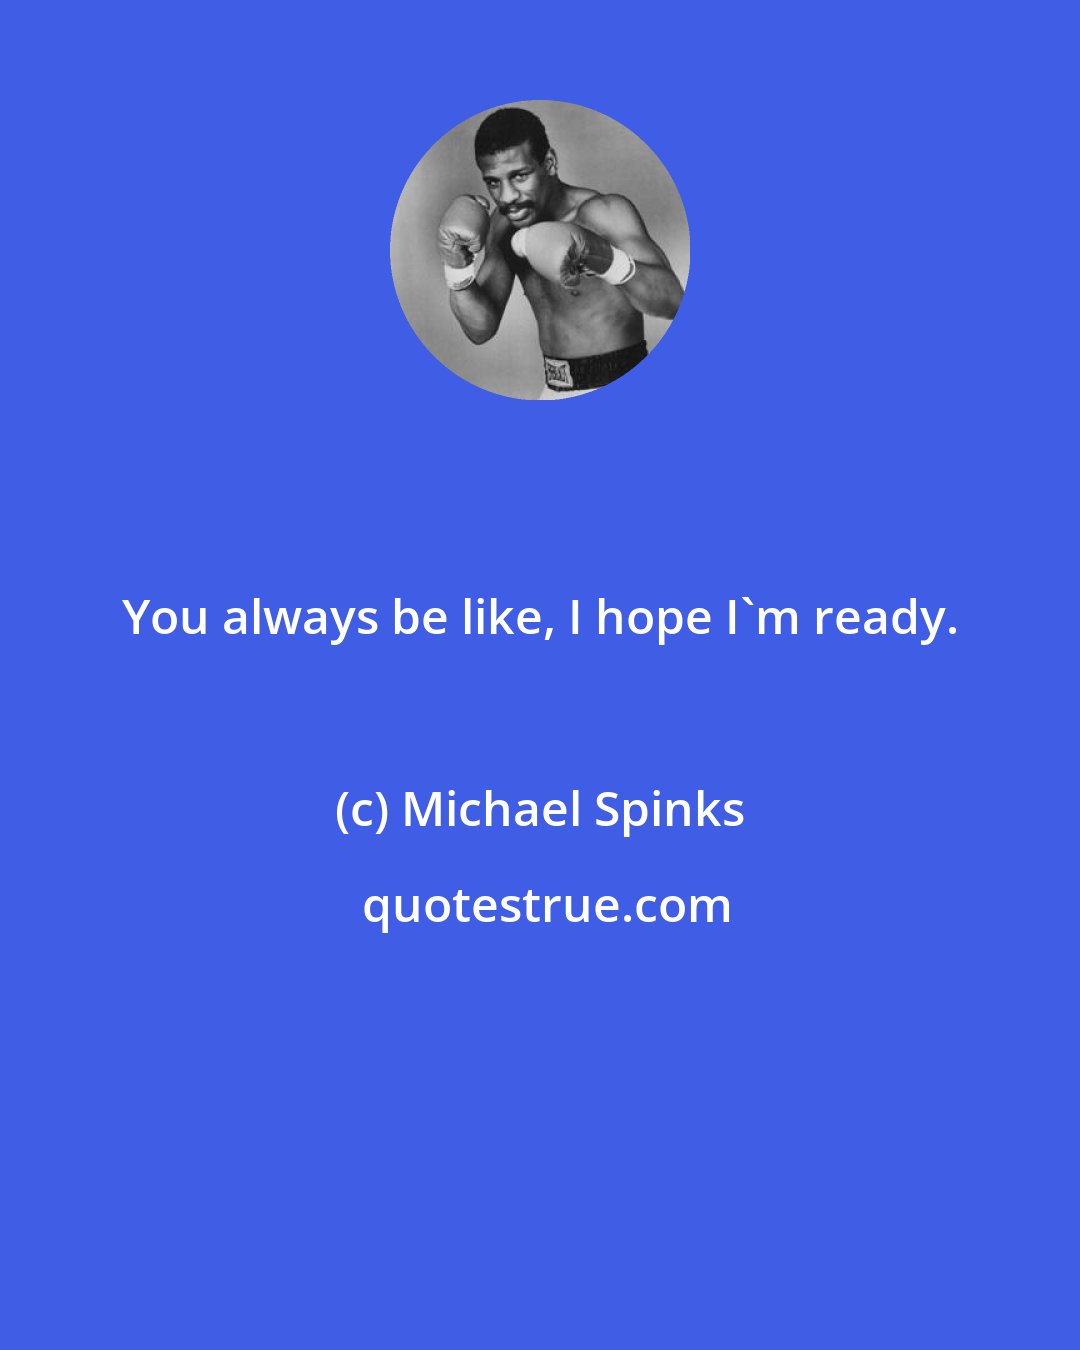 Michael Spinks: You always be like, I hope I'm ready.